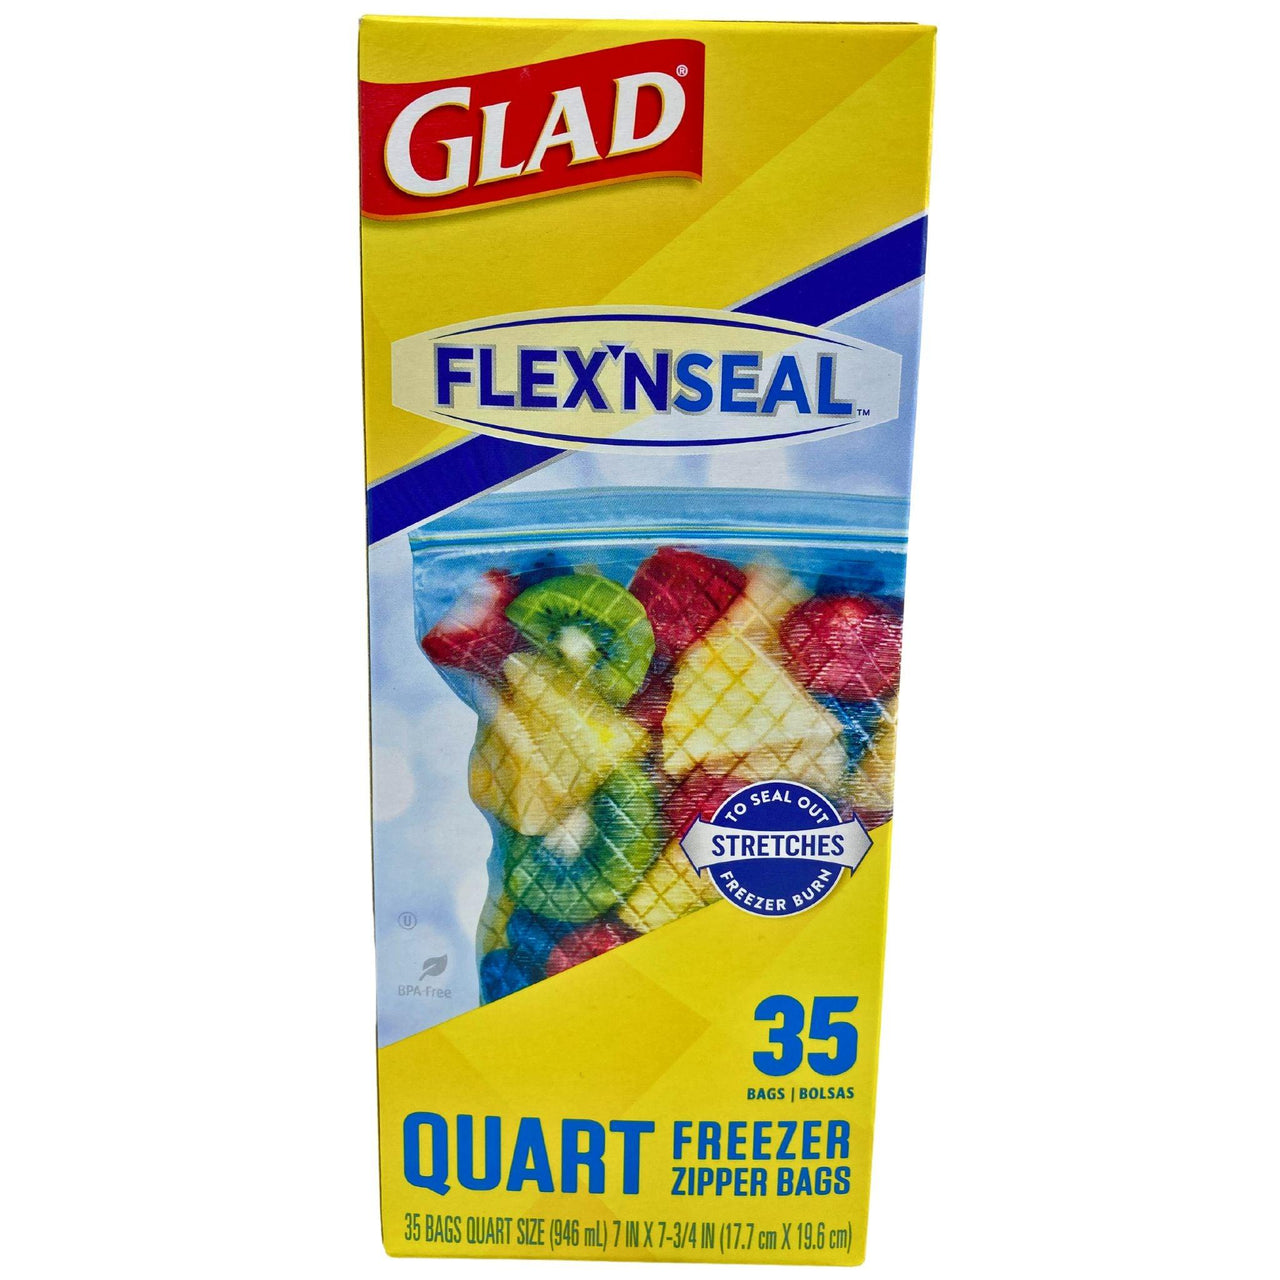 GLAD Flex'NSeal Quart Freezer Zipper | Discount Wholesalers Inc